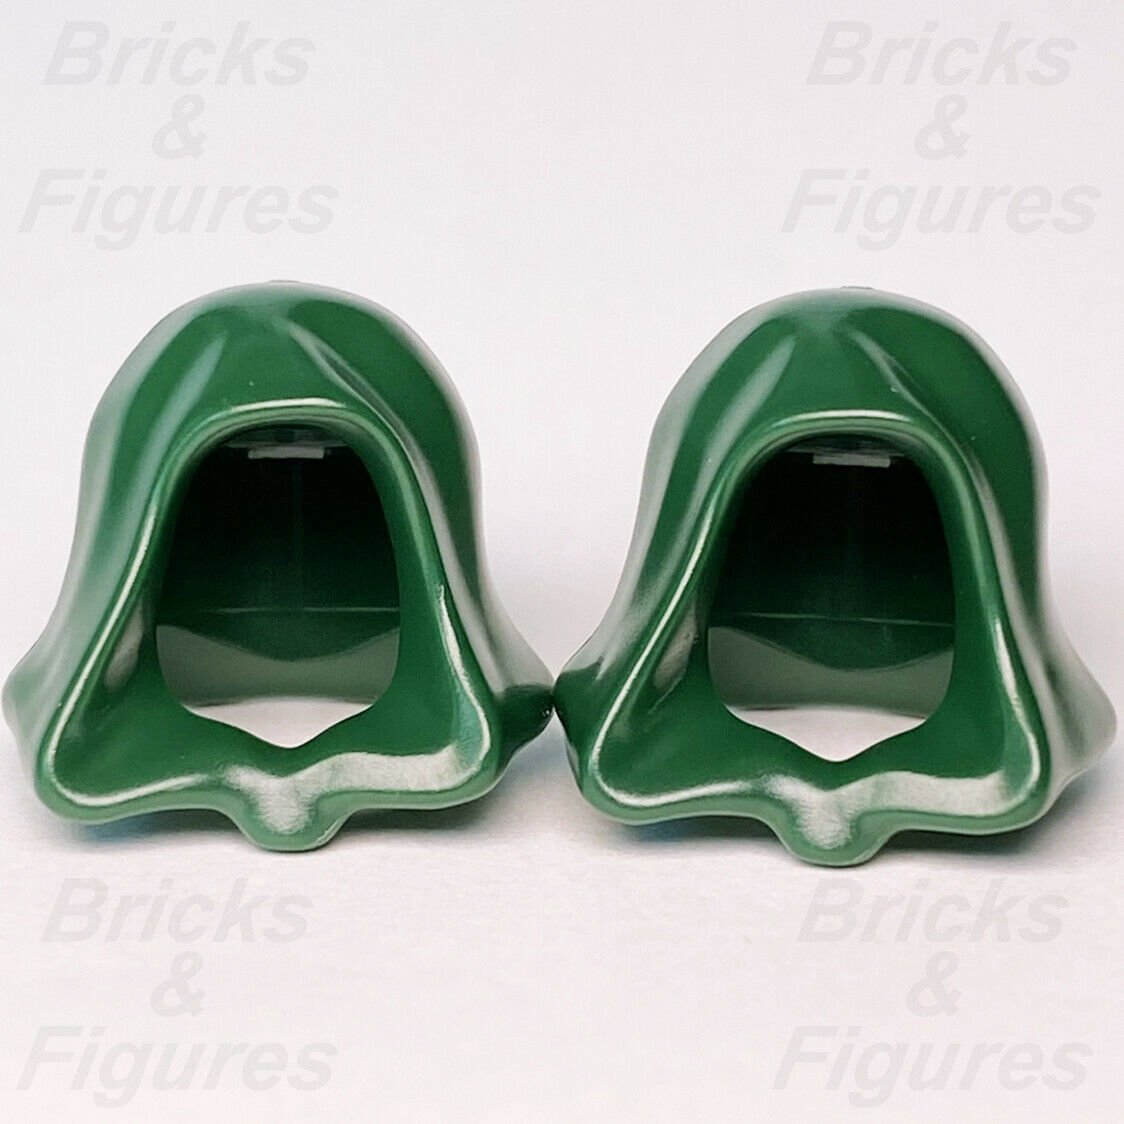 2 x Star Wars LEGO Dark Green Robe Hoods Minifigure Headgear Parts 30381 96232 - Bricks & Figures